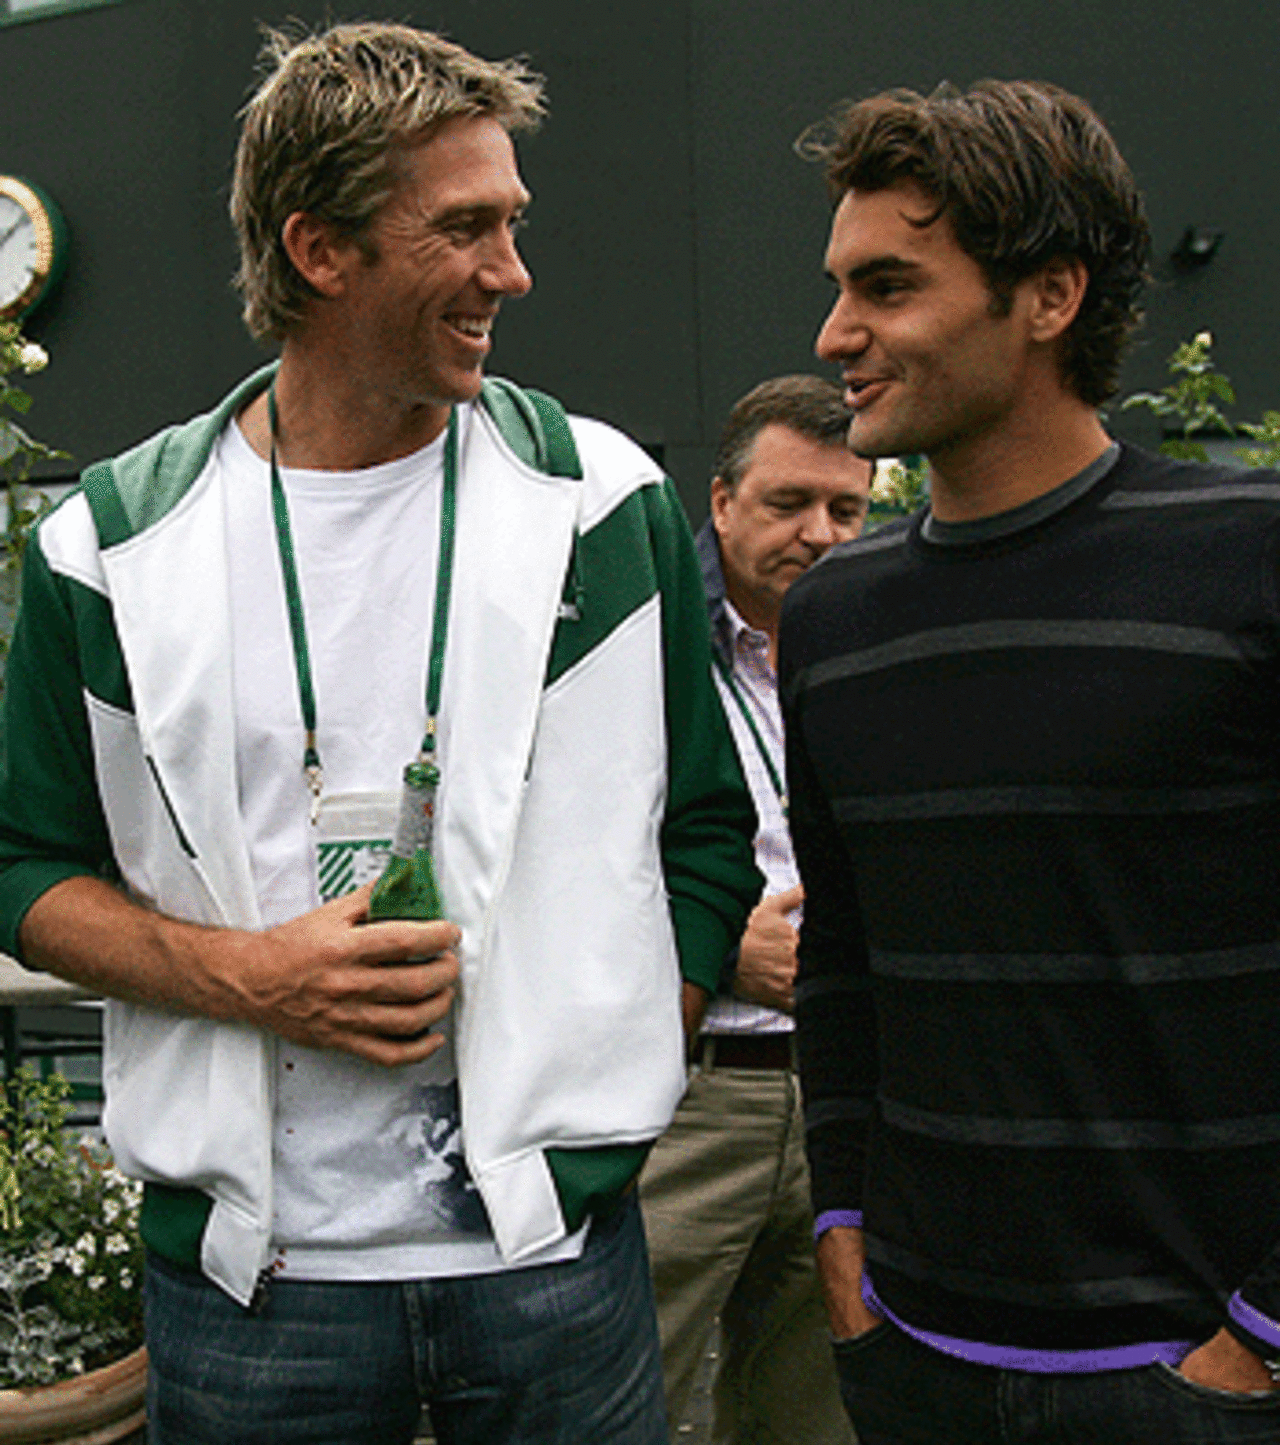 Roger Federer meets Glenn McGrath after the Wimbledon final, July 3, 2005